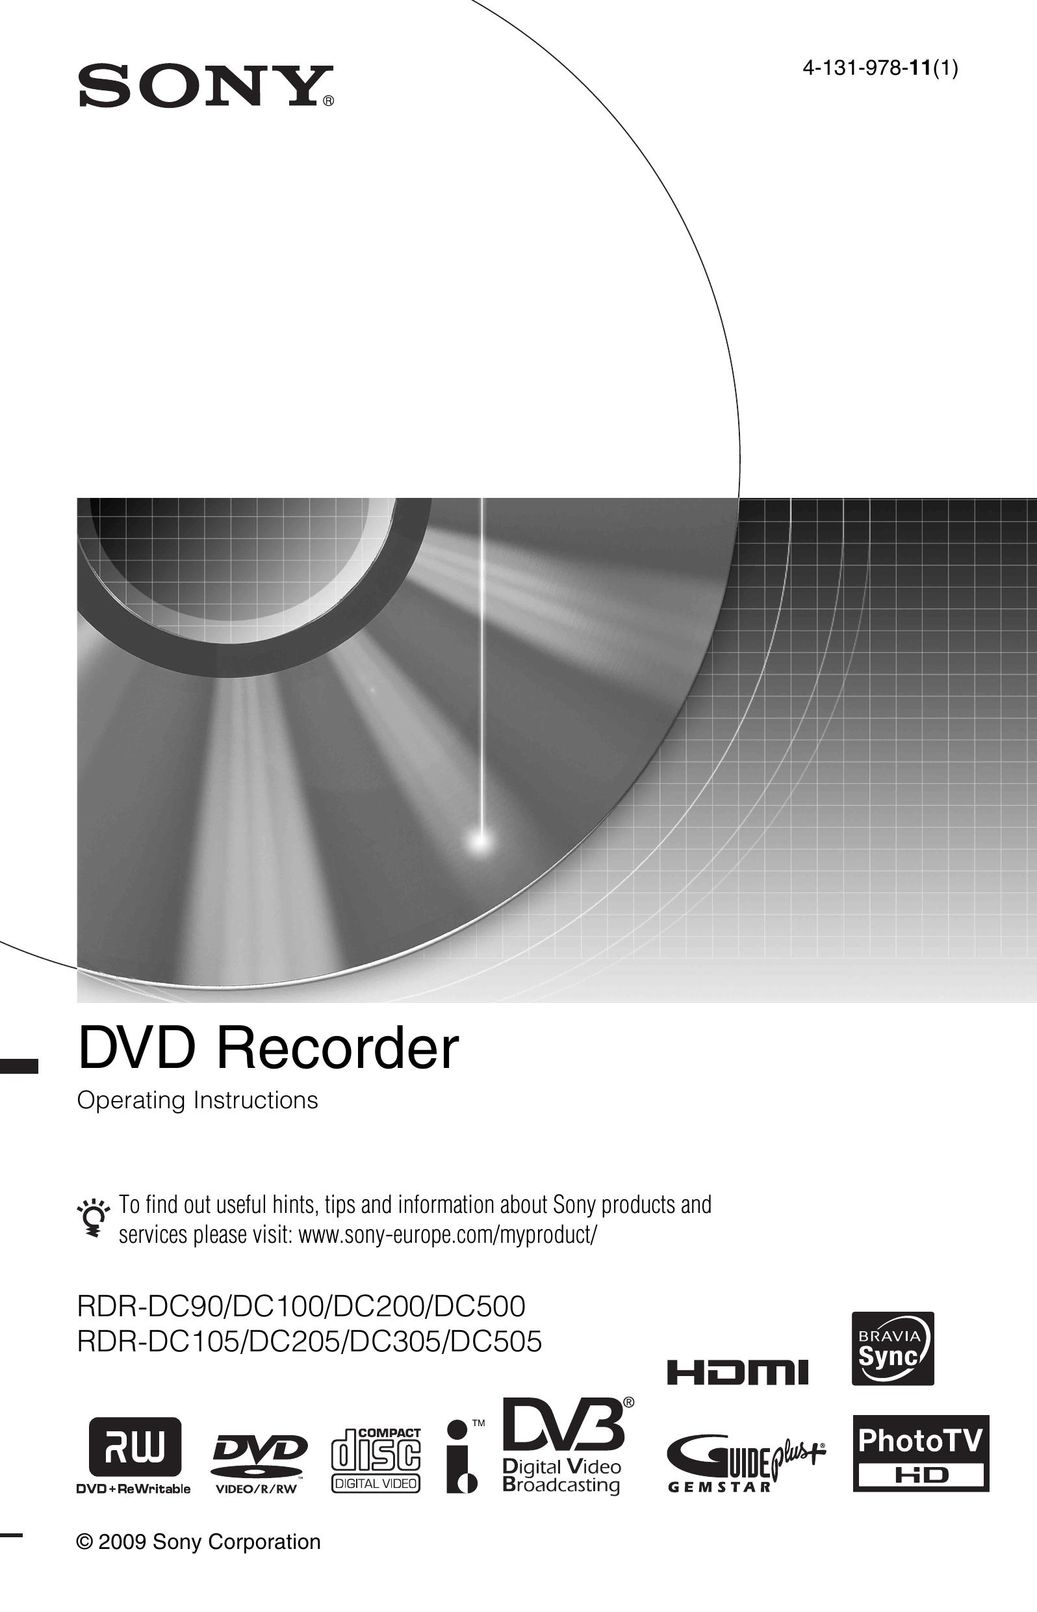 Sony RDR-DC505 DVD Recorder User Manual